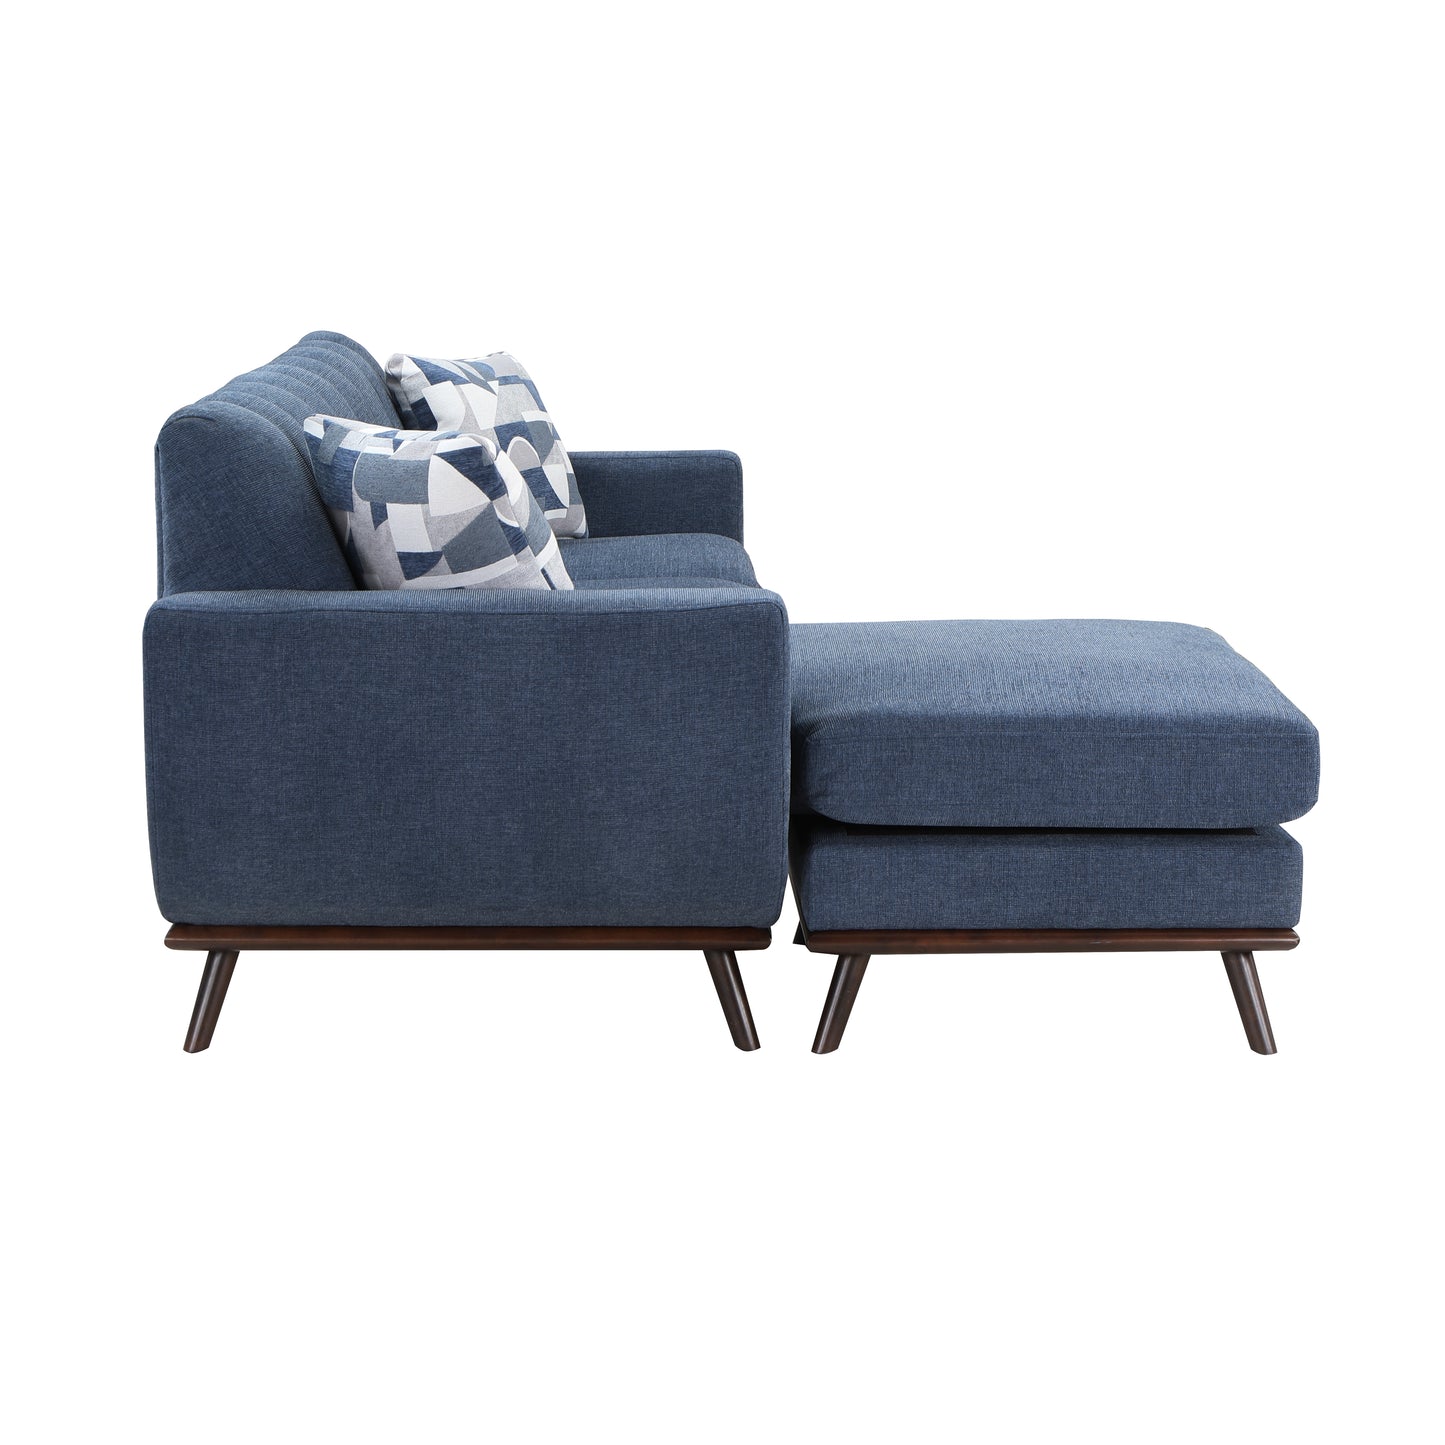 # Mid Century Reversible Sofa Chaise BLUE